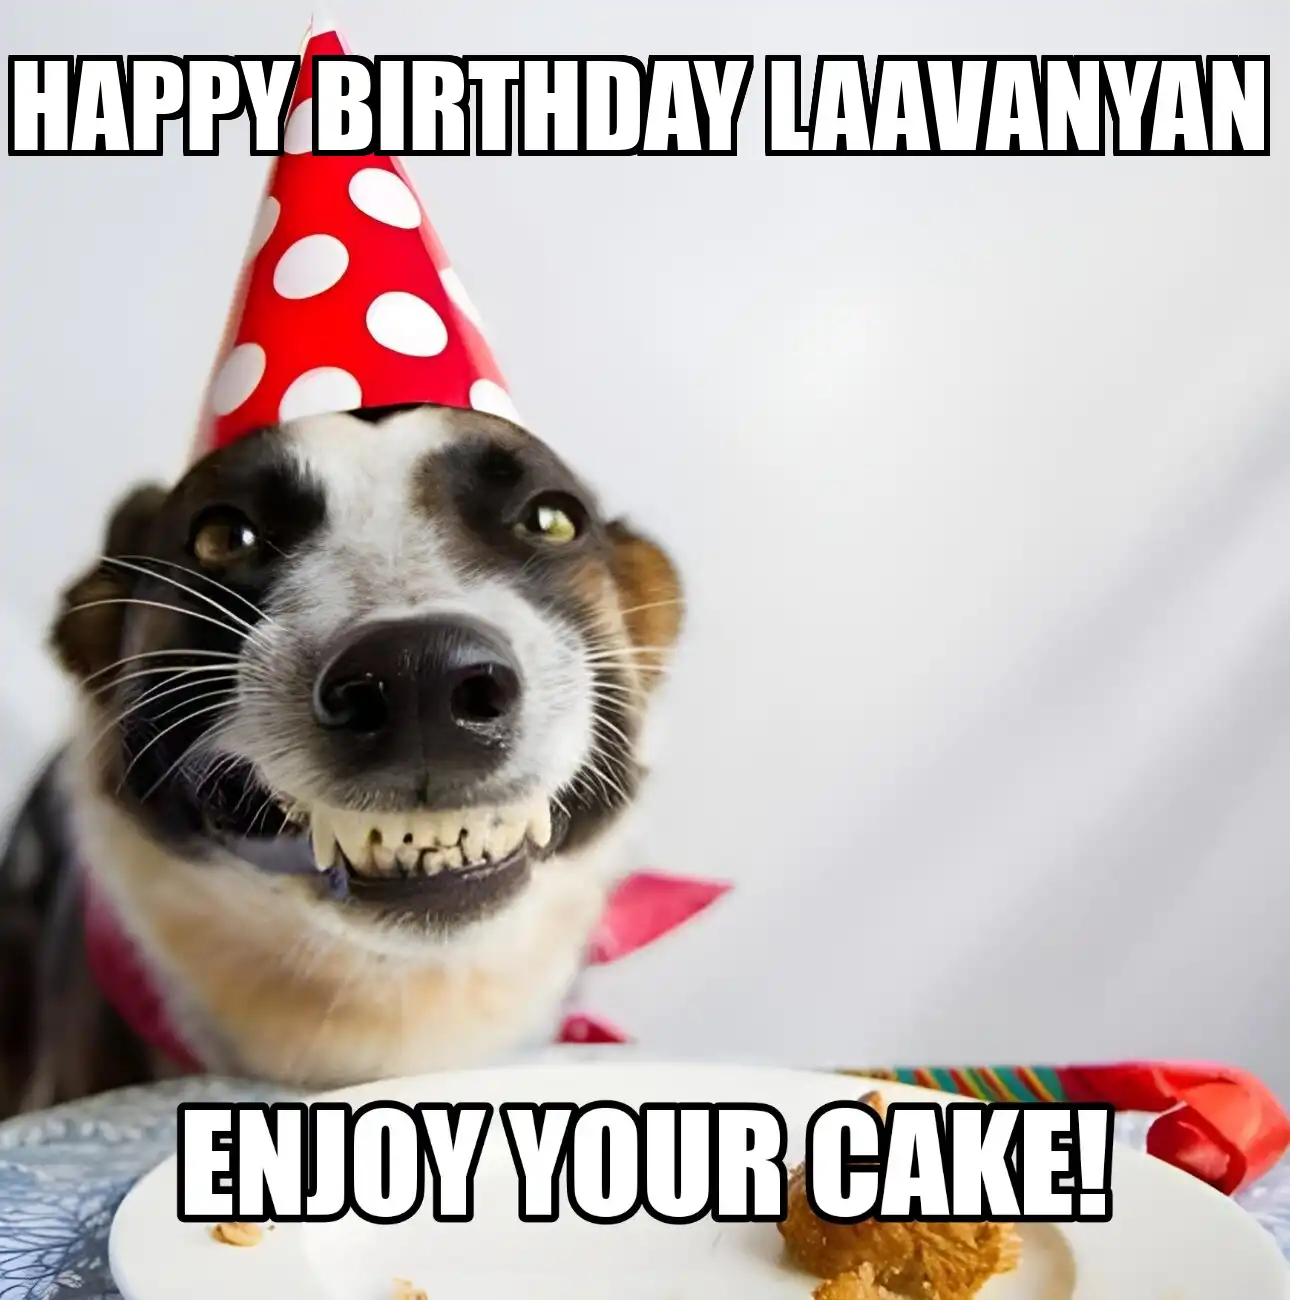 Happy Birthday Laavanyan Enjoy Your Cake Dog Meme